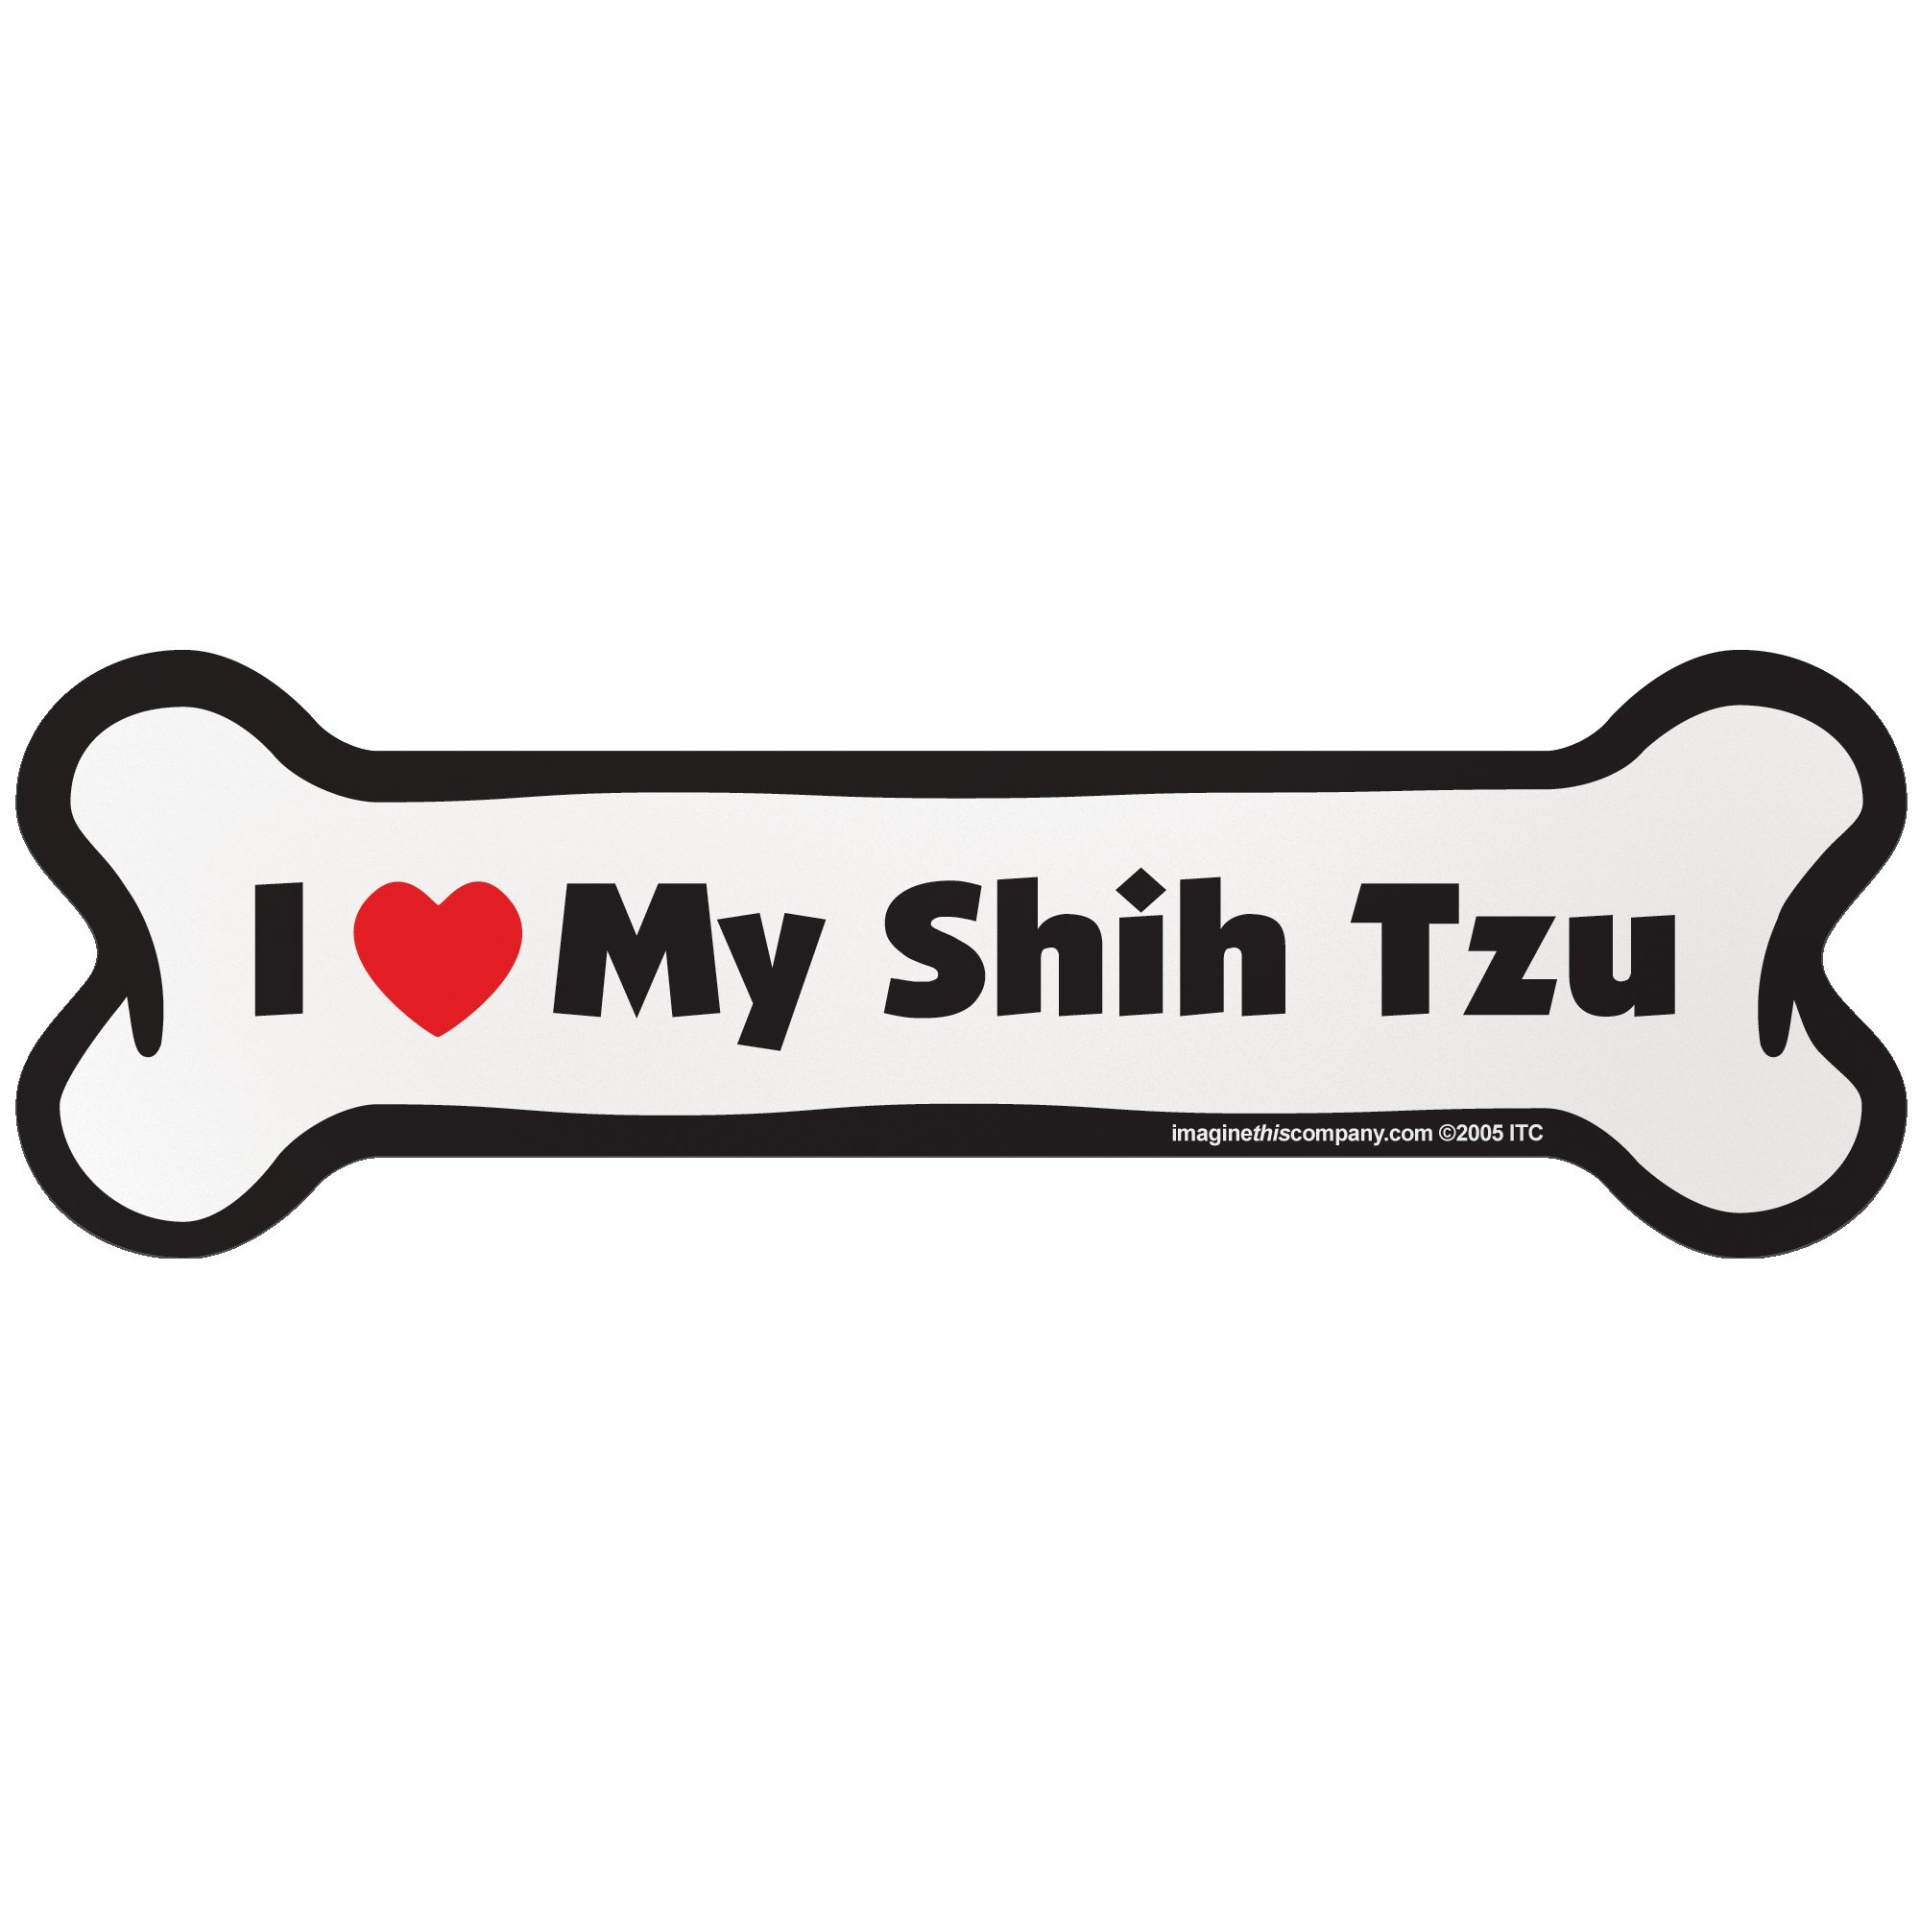 slide 1 of 1, Imagine This "I Love My Shih Tzu" Bone Car Magnet, SM